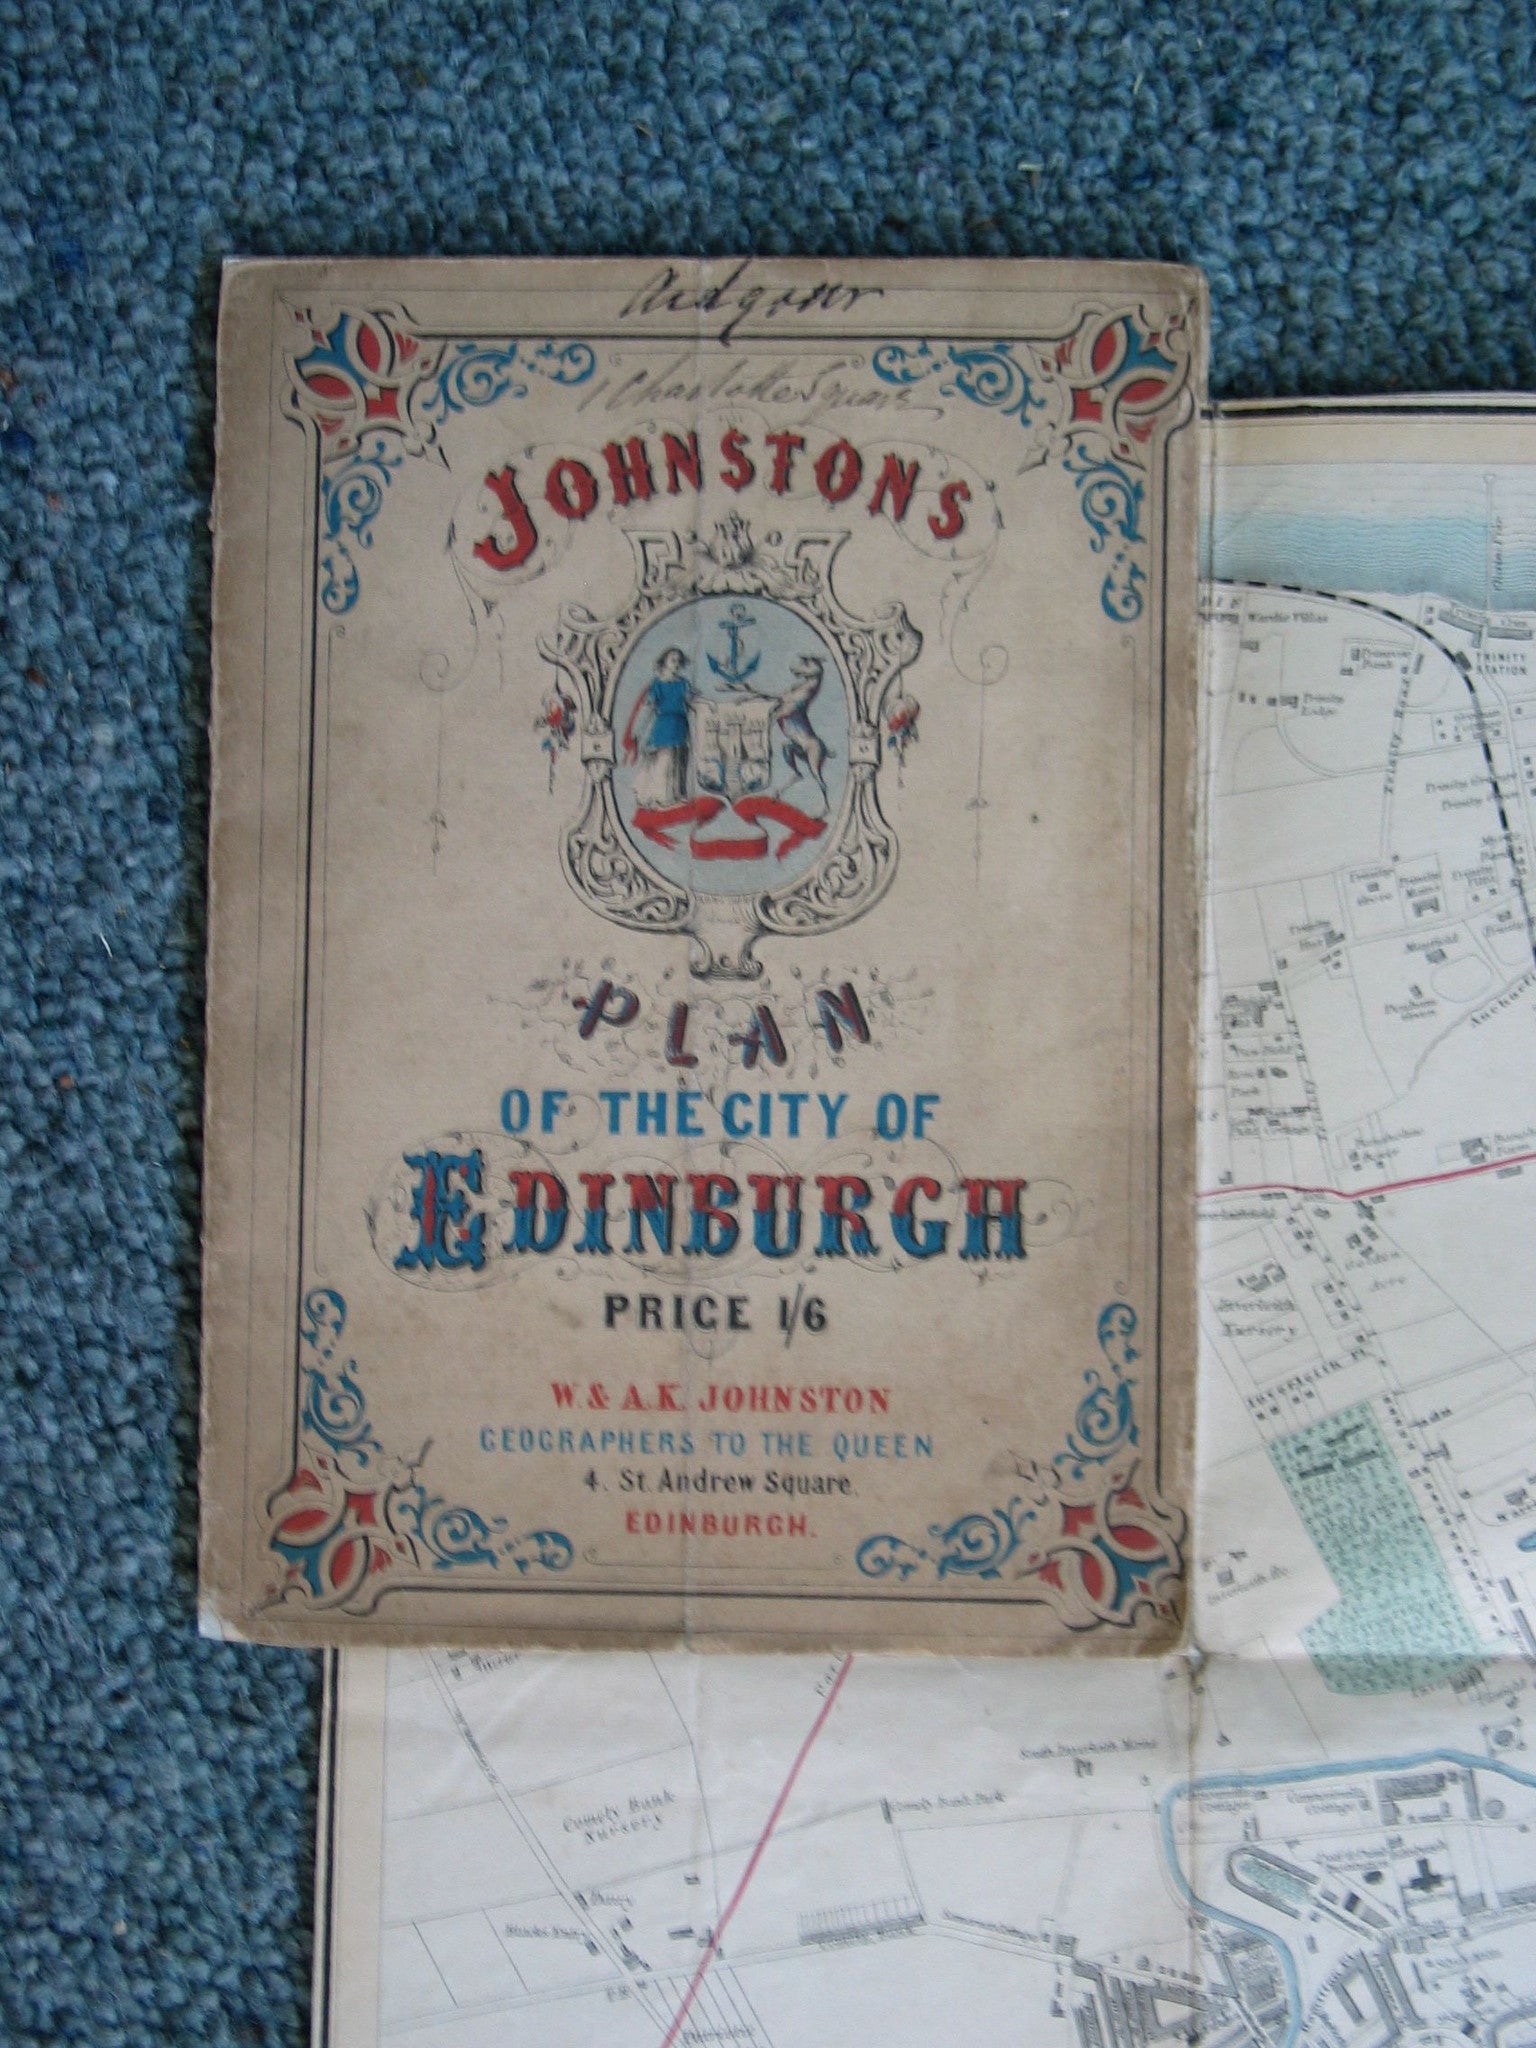 Plan of the City of Edinburgh